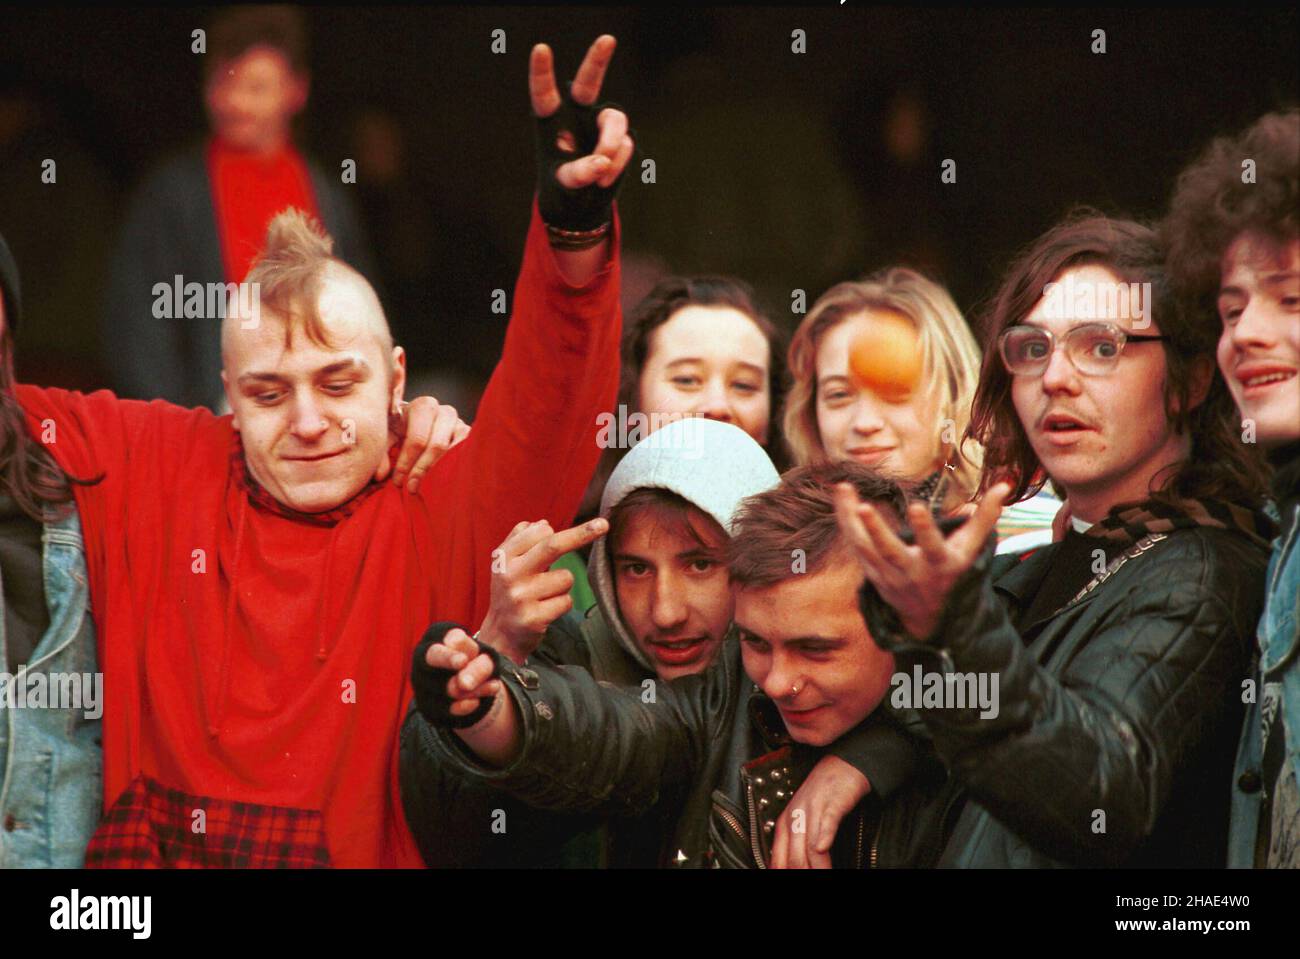 Katowice, 25.11.1995. 'Odjazdy '95' festiwal w Katowicach. (mr) PAP/Roman Koszowski     Katowice, 25.11.1995. Participants of the 'Odjazdy '95' festival in Katowice. (mr) PAP/Roman Koszowski Stock Photo